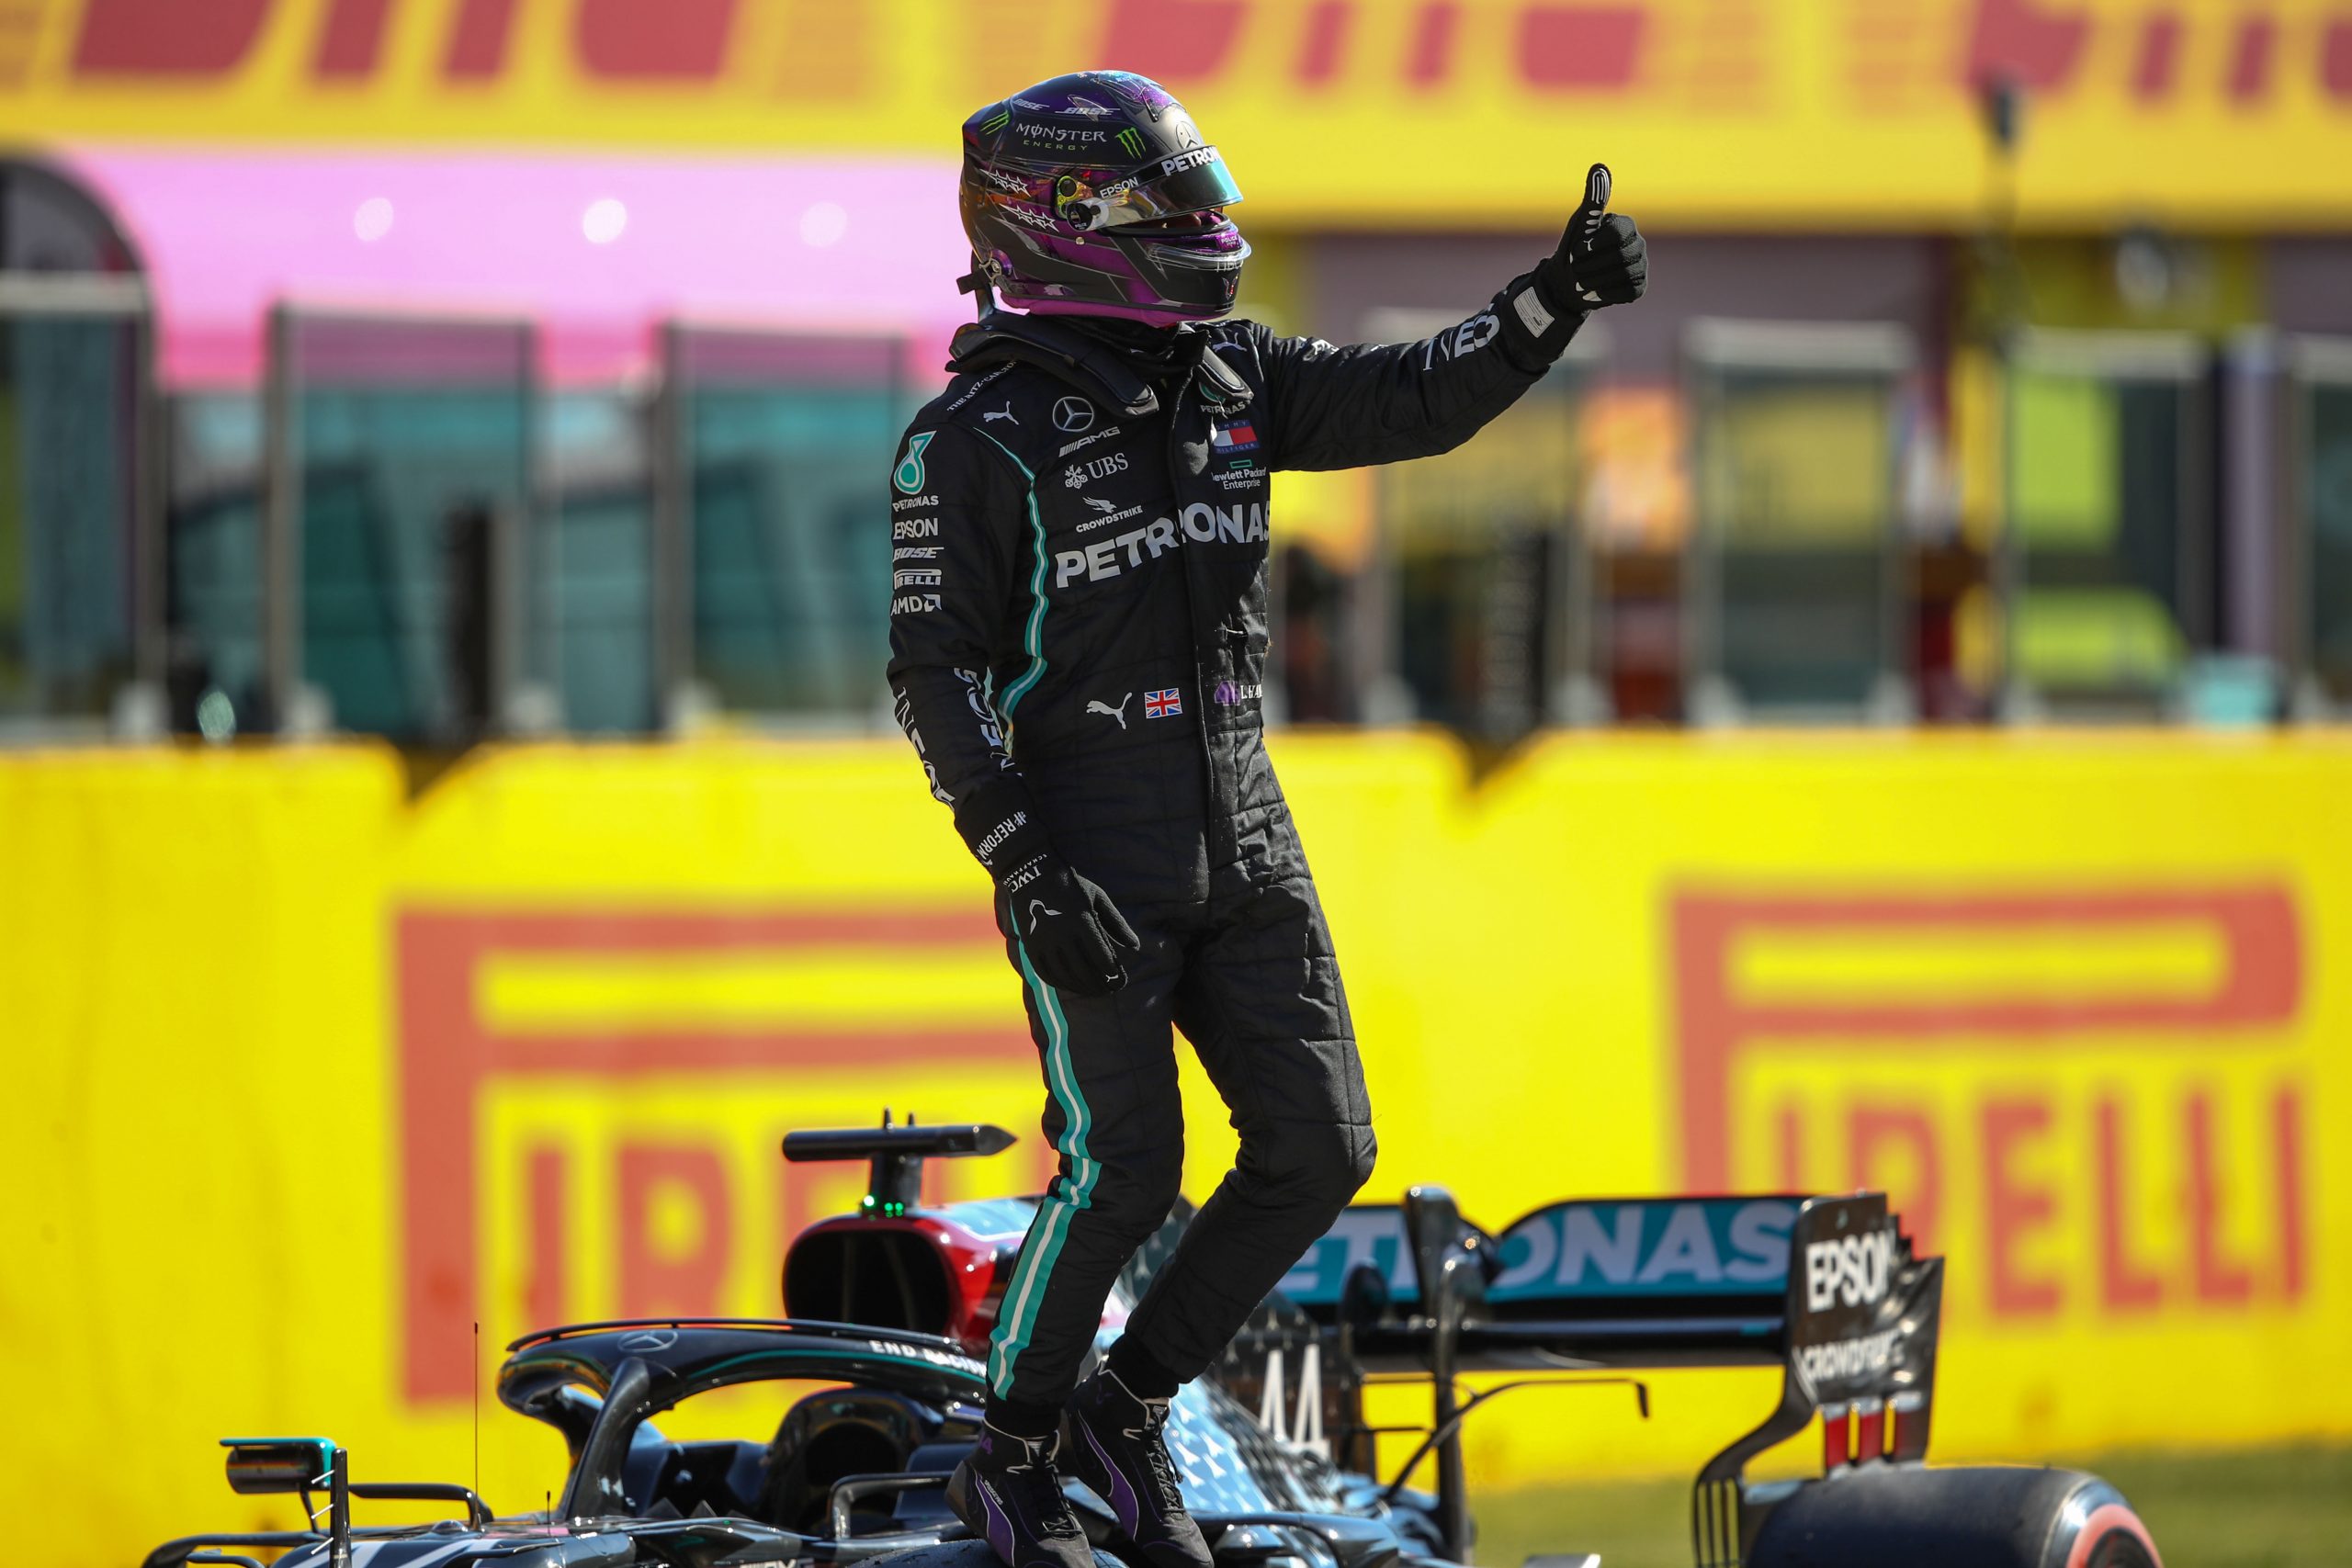 Lewis Hamilton wins Eifel Grand Prix, equals Michael Schumacher’s record of 91 victories